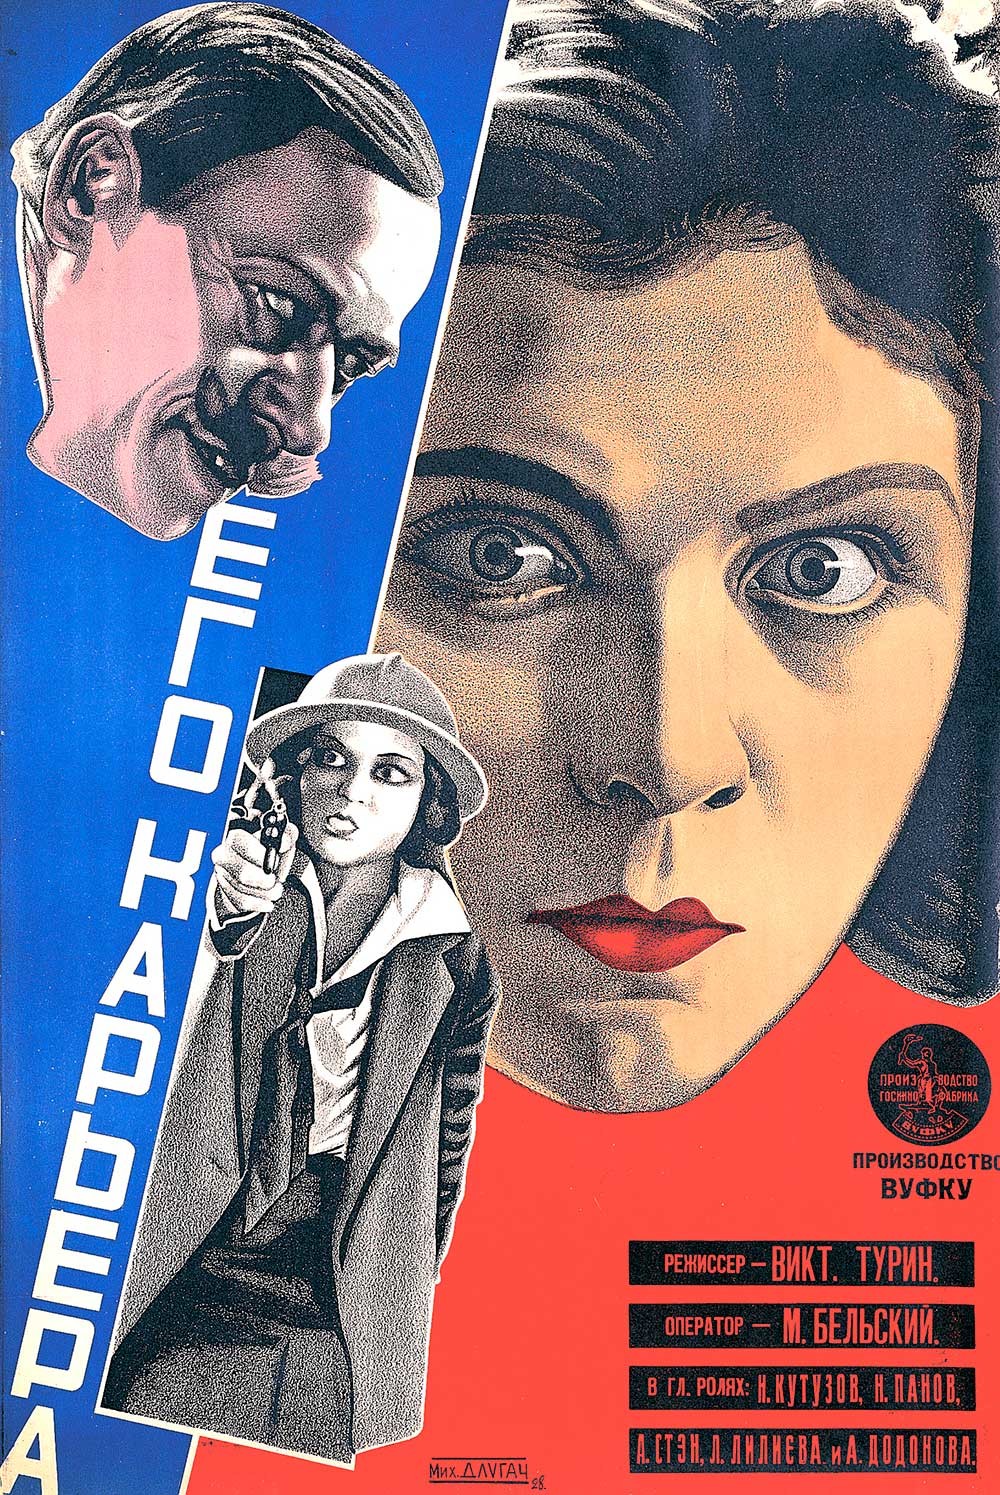 Mikhail Dlugach, Film poster for Yego Kariera, 1928